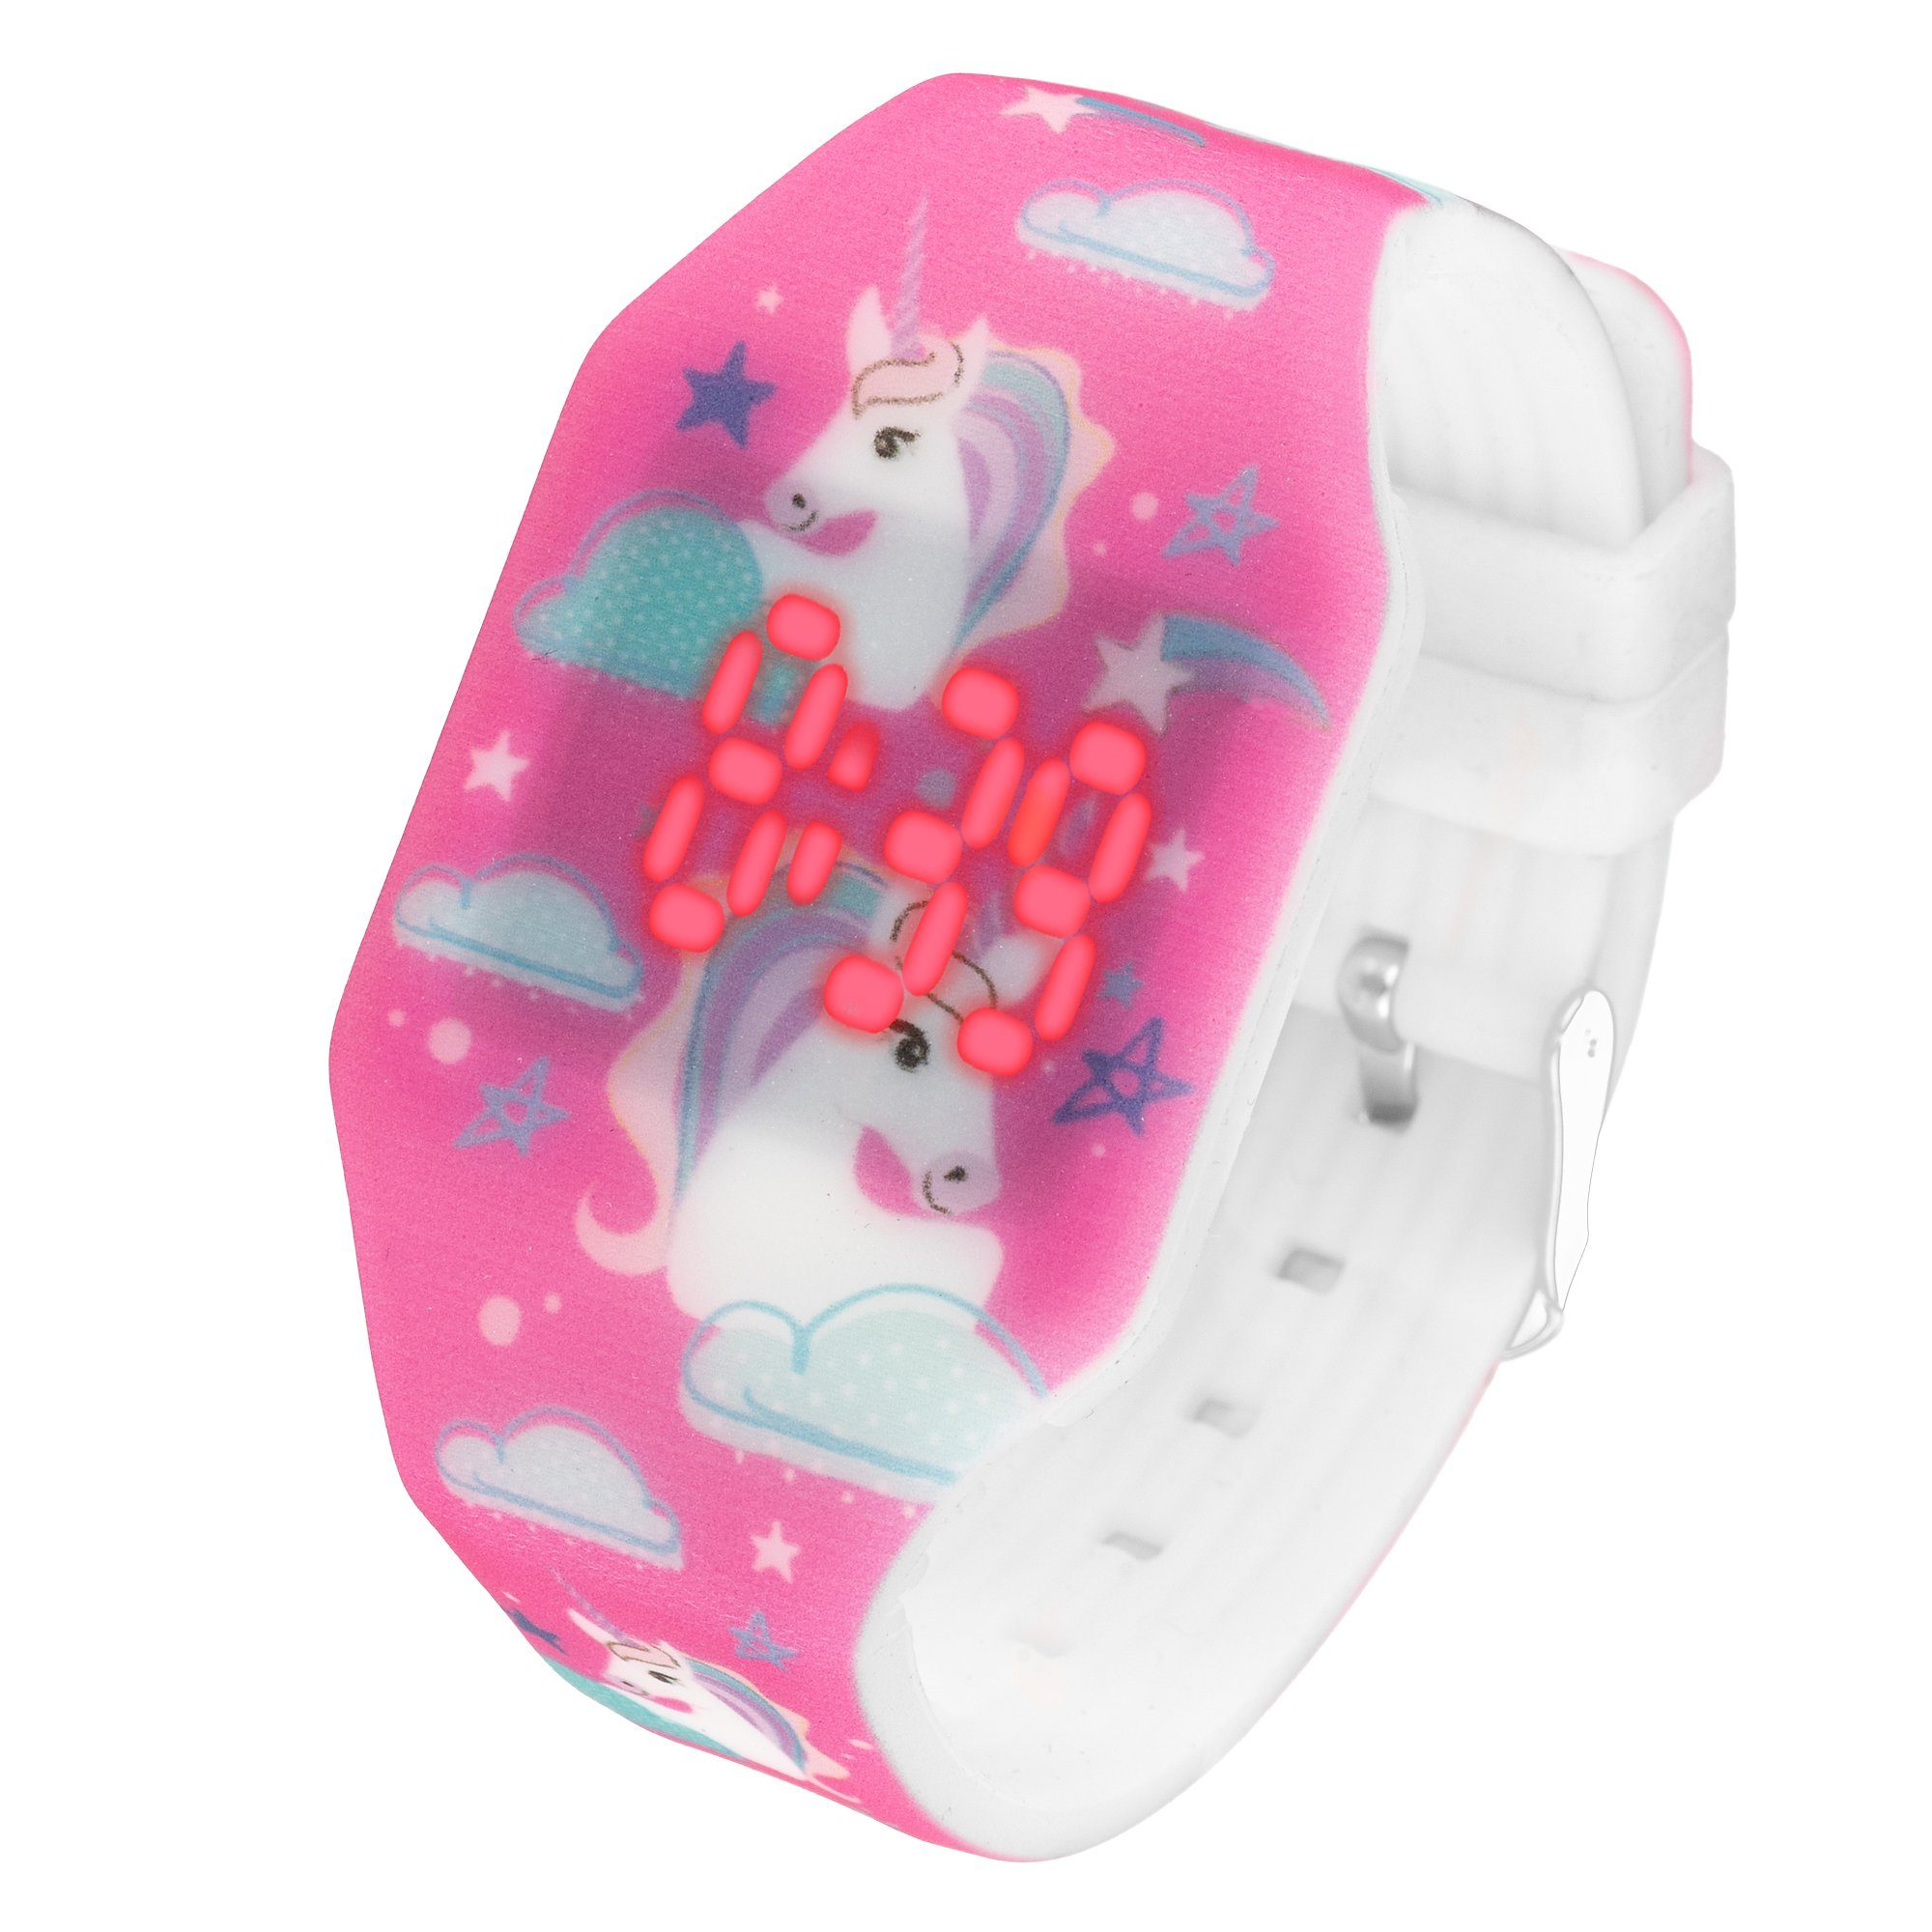 Taffstyle Quarzuhr Kinder Armbanduhr Silikon Einhorn Digital LED Uhr, Mädchen Fluoreszierend Sportuhr Kinderuhr Lernuhr Bunt Regenbogen pink